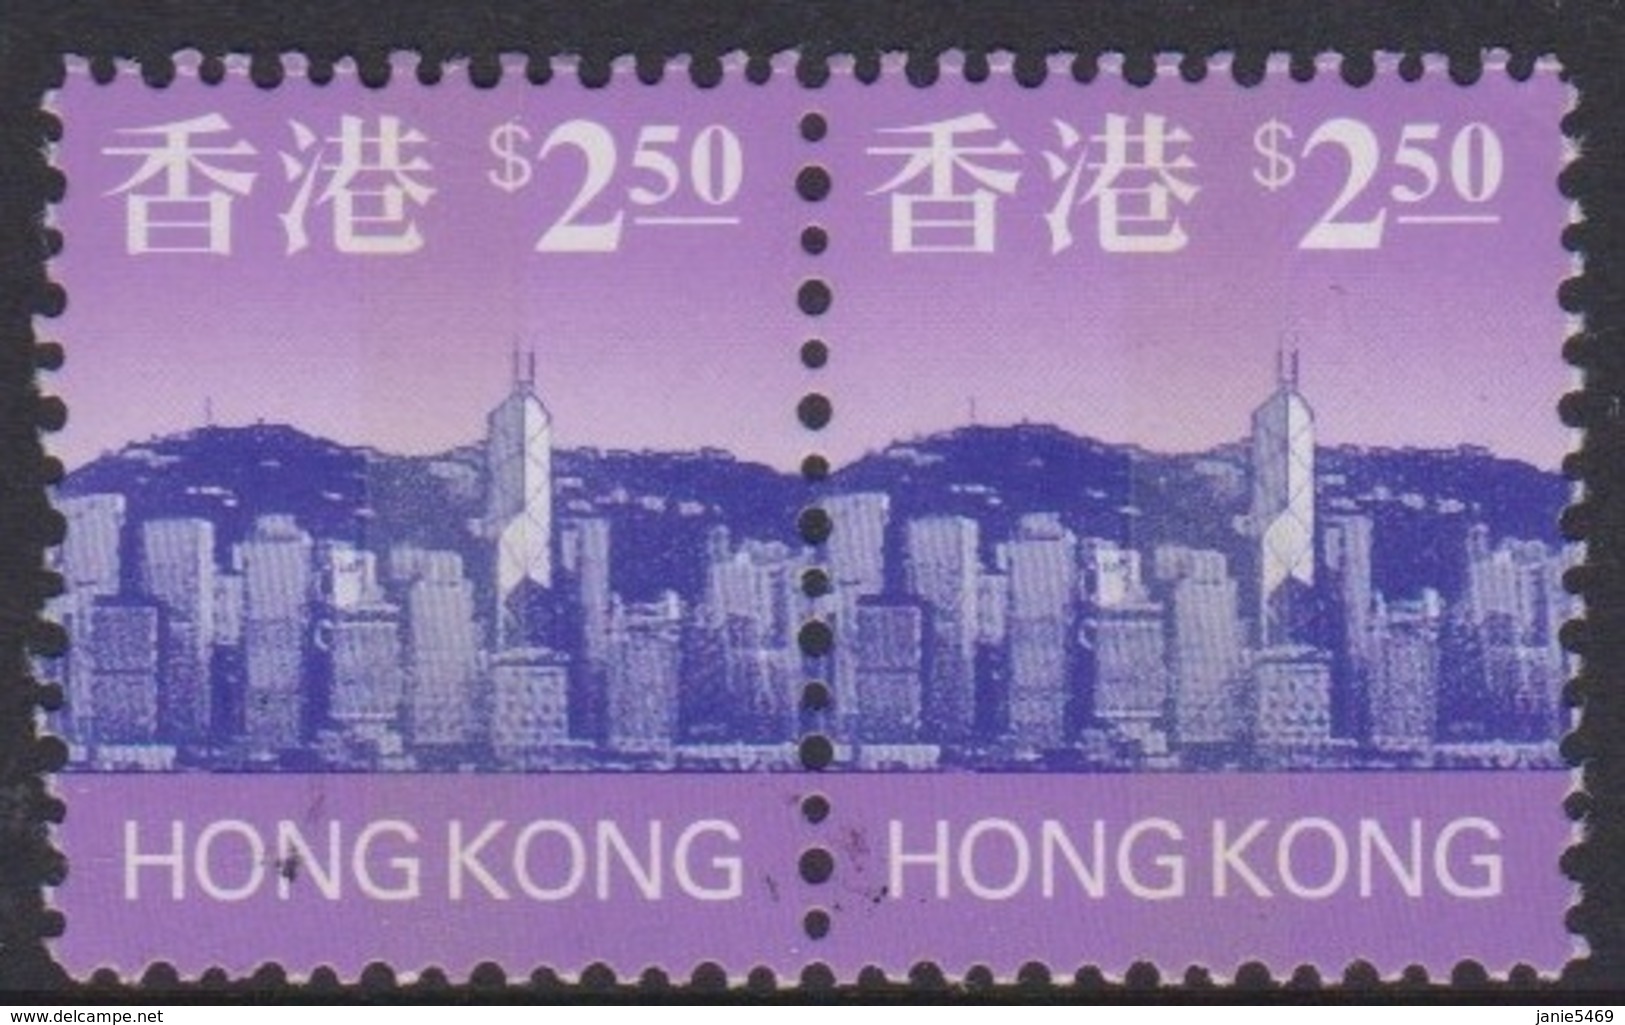 Hong Kong Scott 773 1997 Hong Kong Skyline $ 2.50 Pair, Mint Never Hinged - Unused Stamps